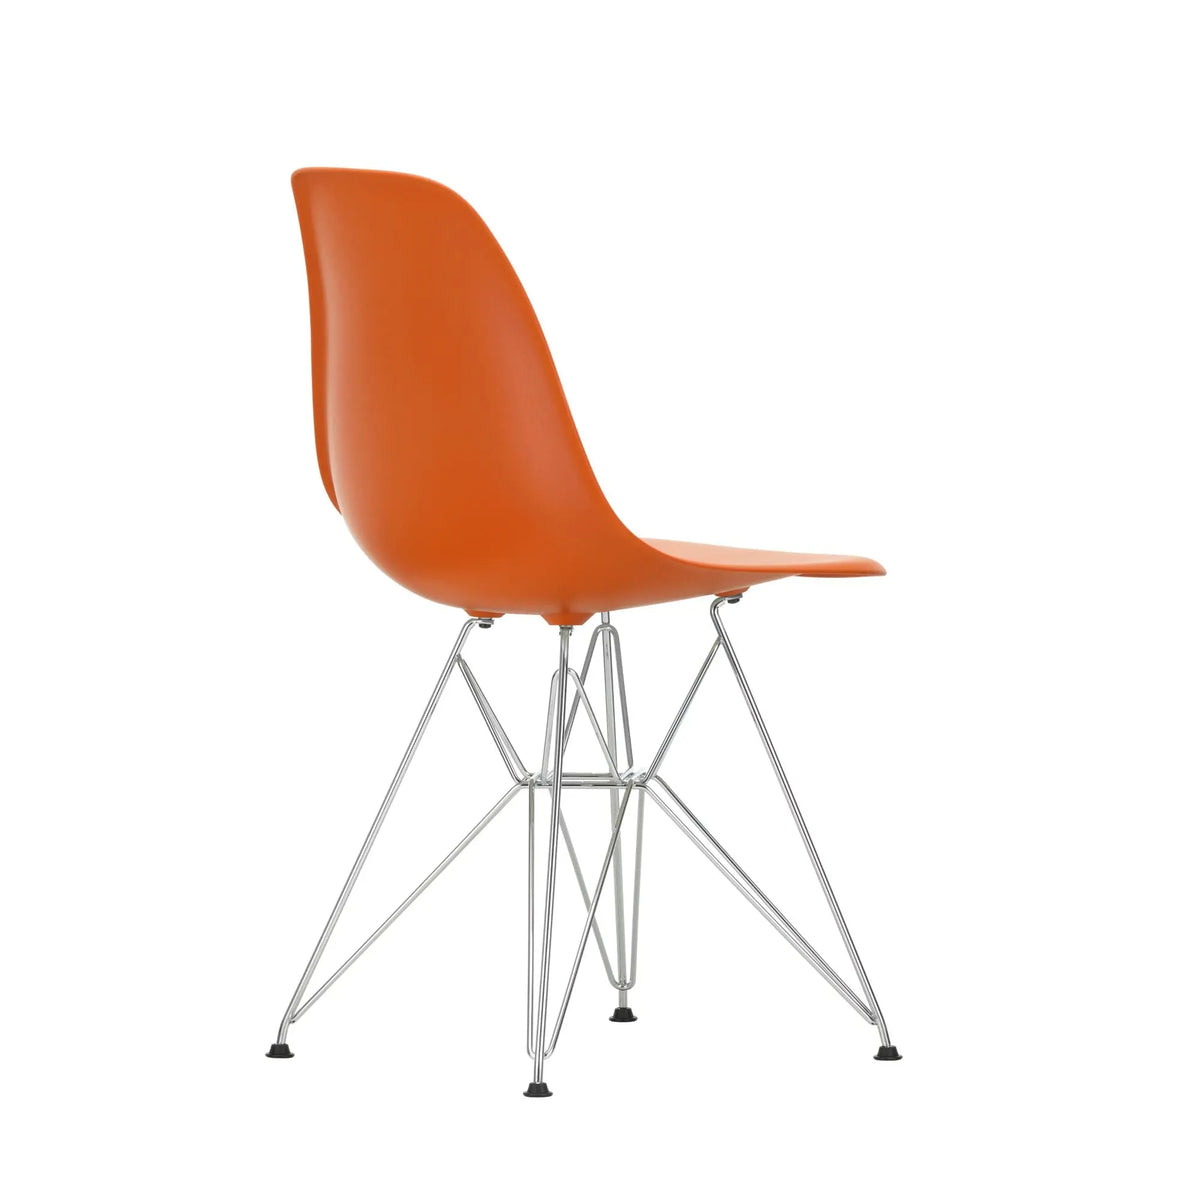 Vitra Eames DSR tuoli RE ruosteinen oranssi/kromi Vitra